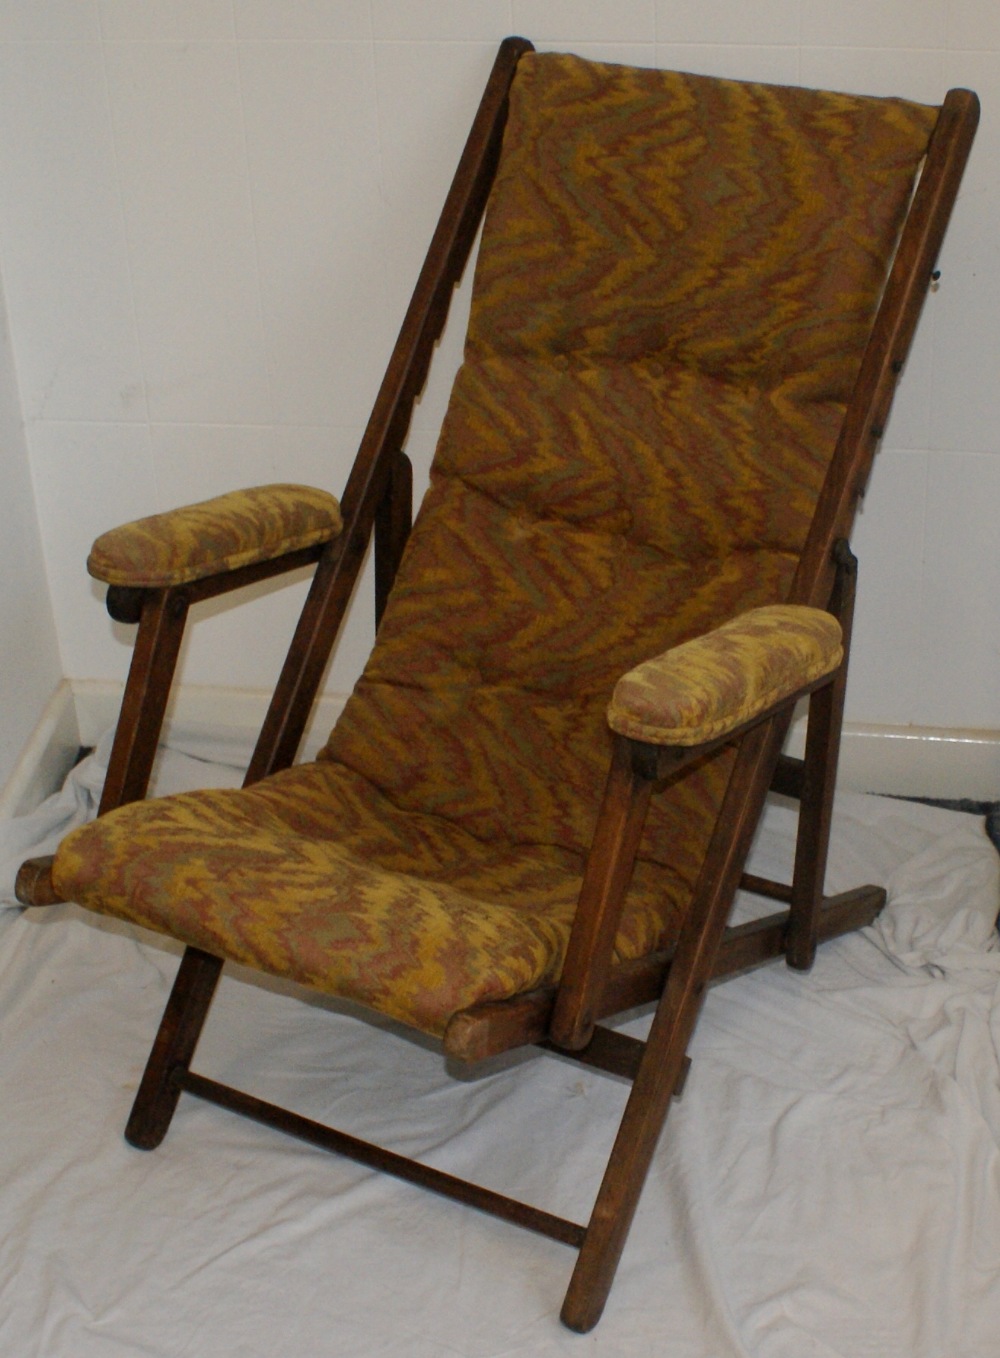 Upholstered 'steamer' deck chair, 1920's - 30's